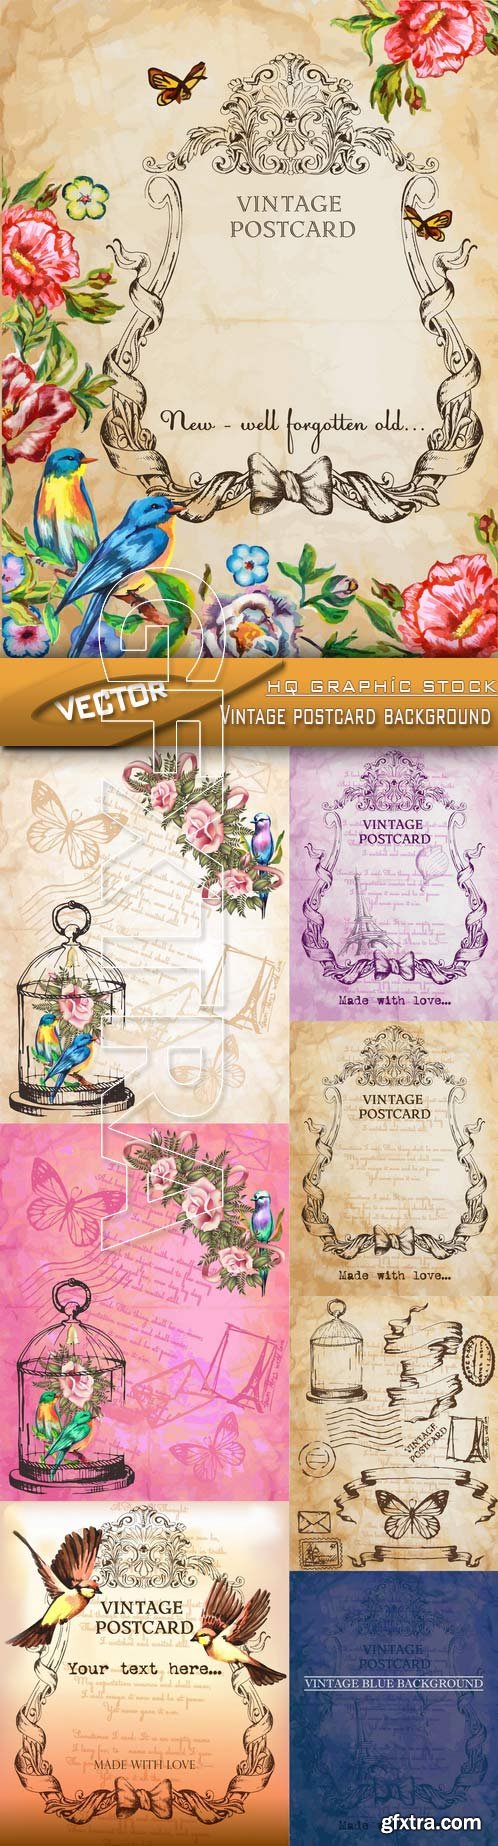 Stock Vector - Vintage postcard background